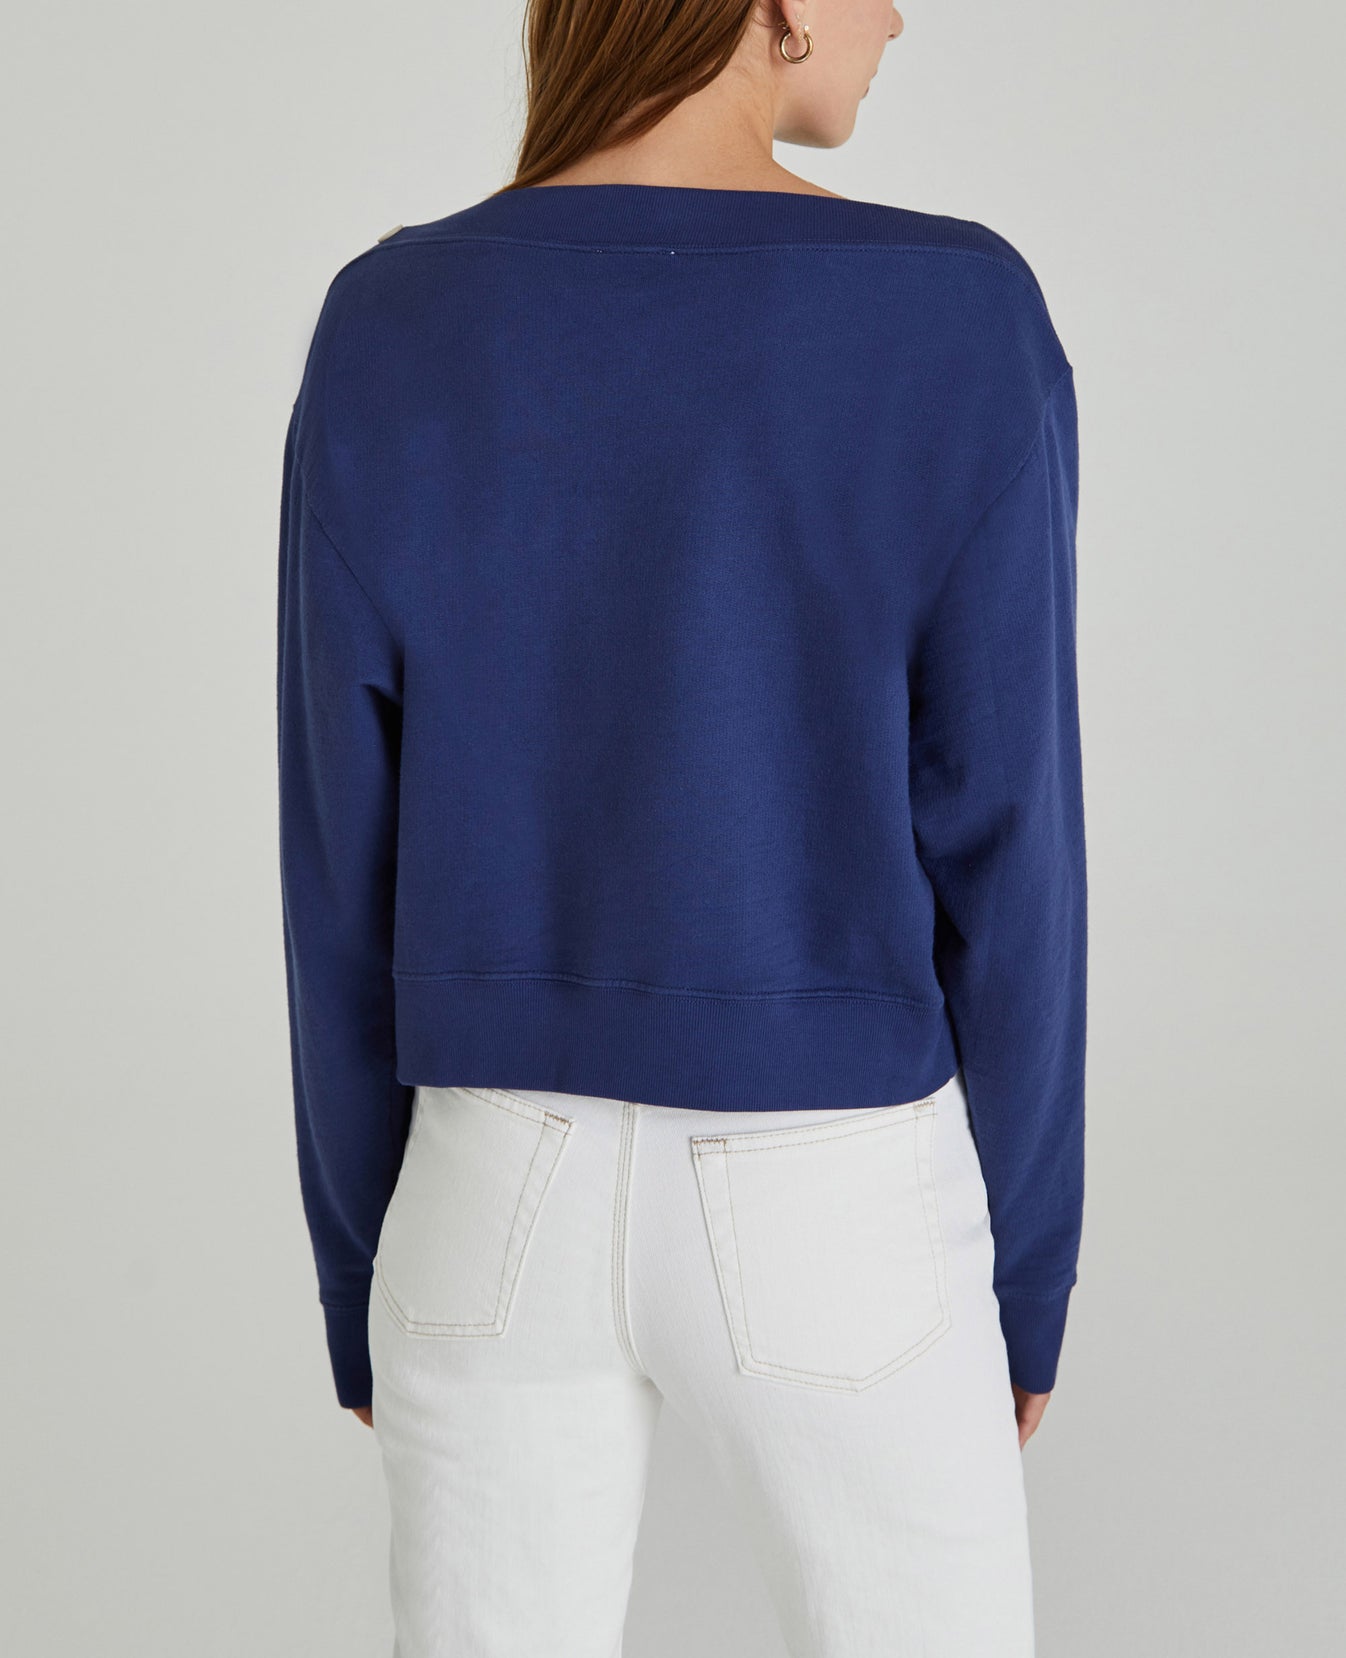 Cyra Sweatshirt Bright Indigo Snap Button Sweatshirt Women Tops Photo 6